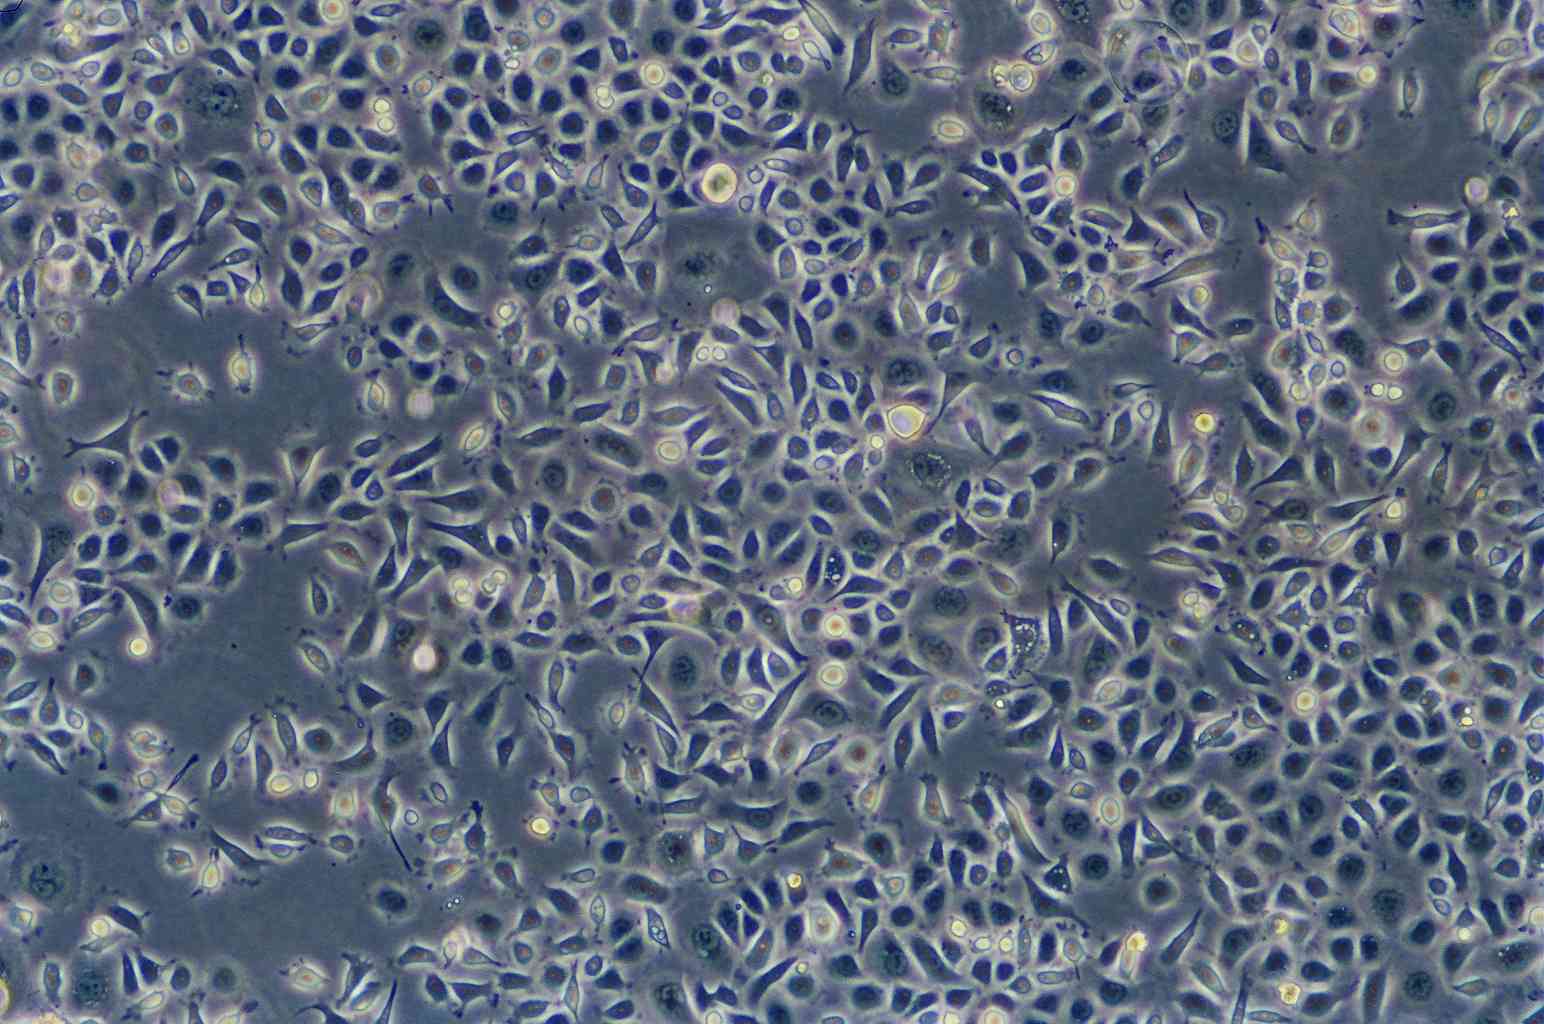 SK-RC-20 epithelioid cells人肾癌细胞系,SK-RC-20 epithelioid cells